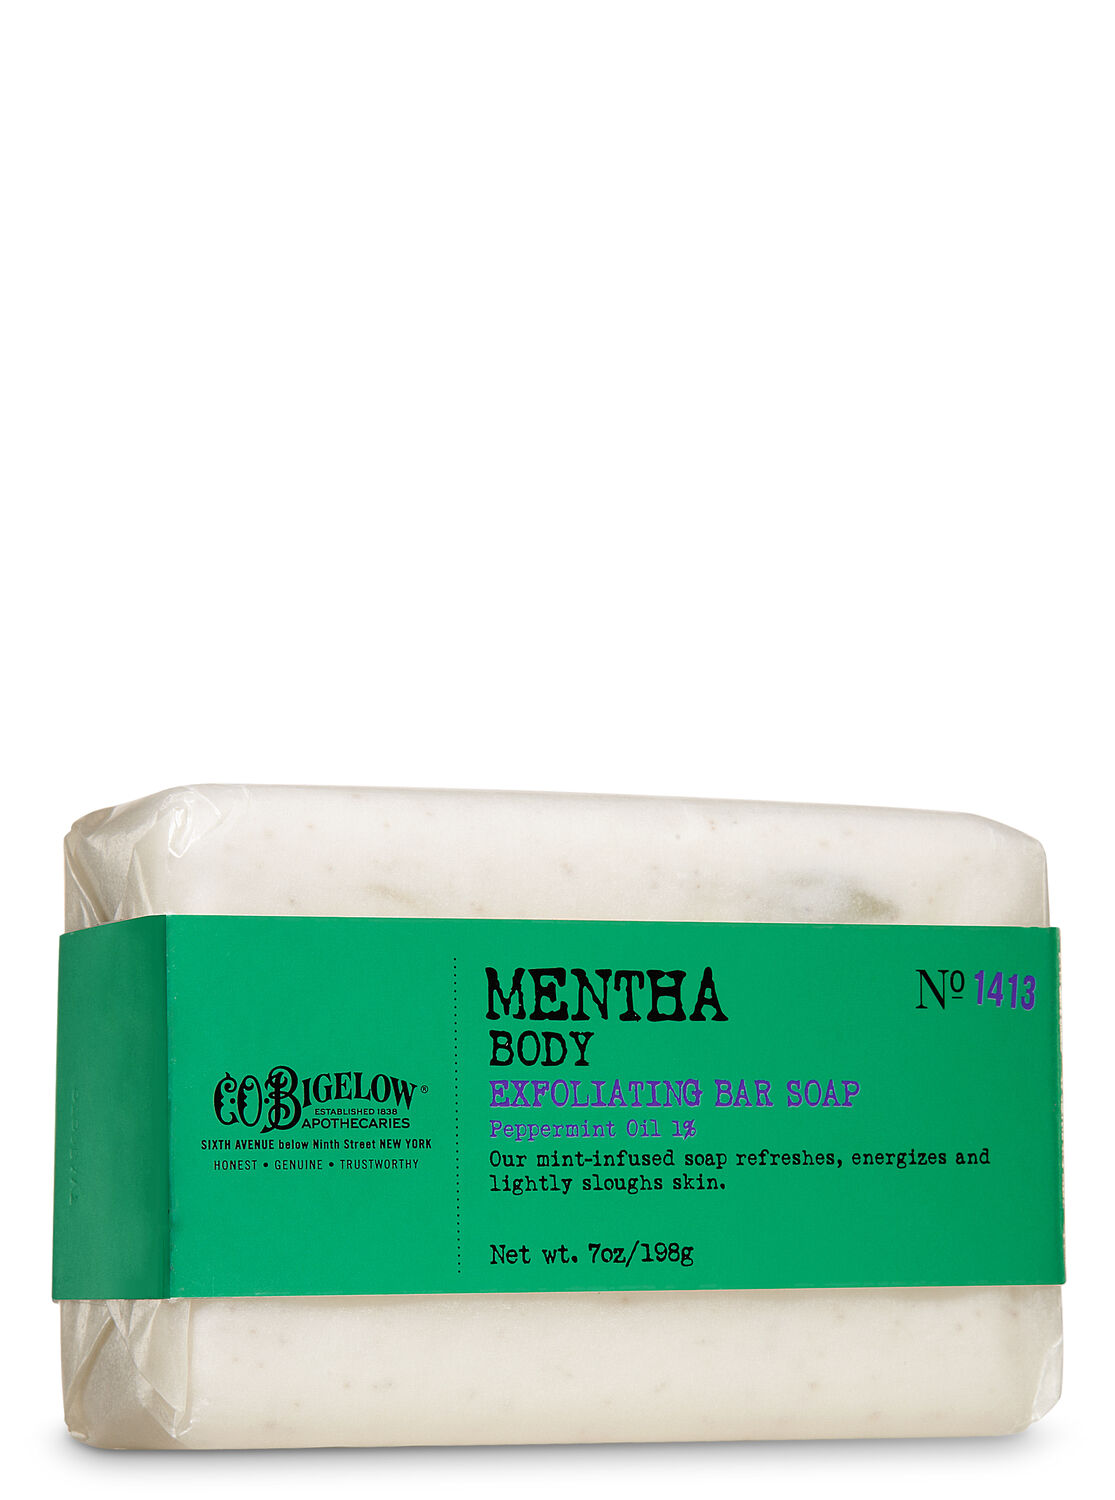 Co Bigelow Mentha Exfoliating Bar Soap